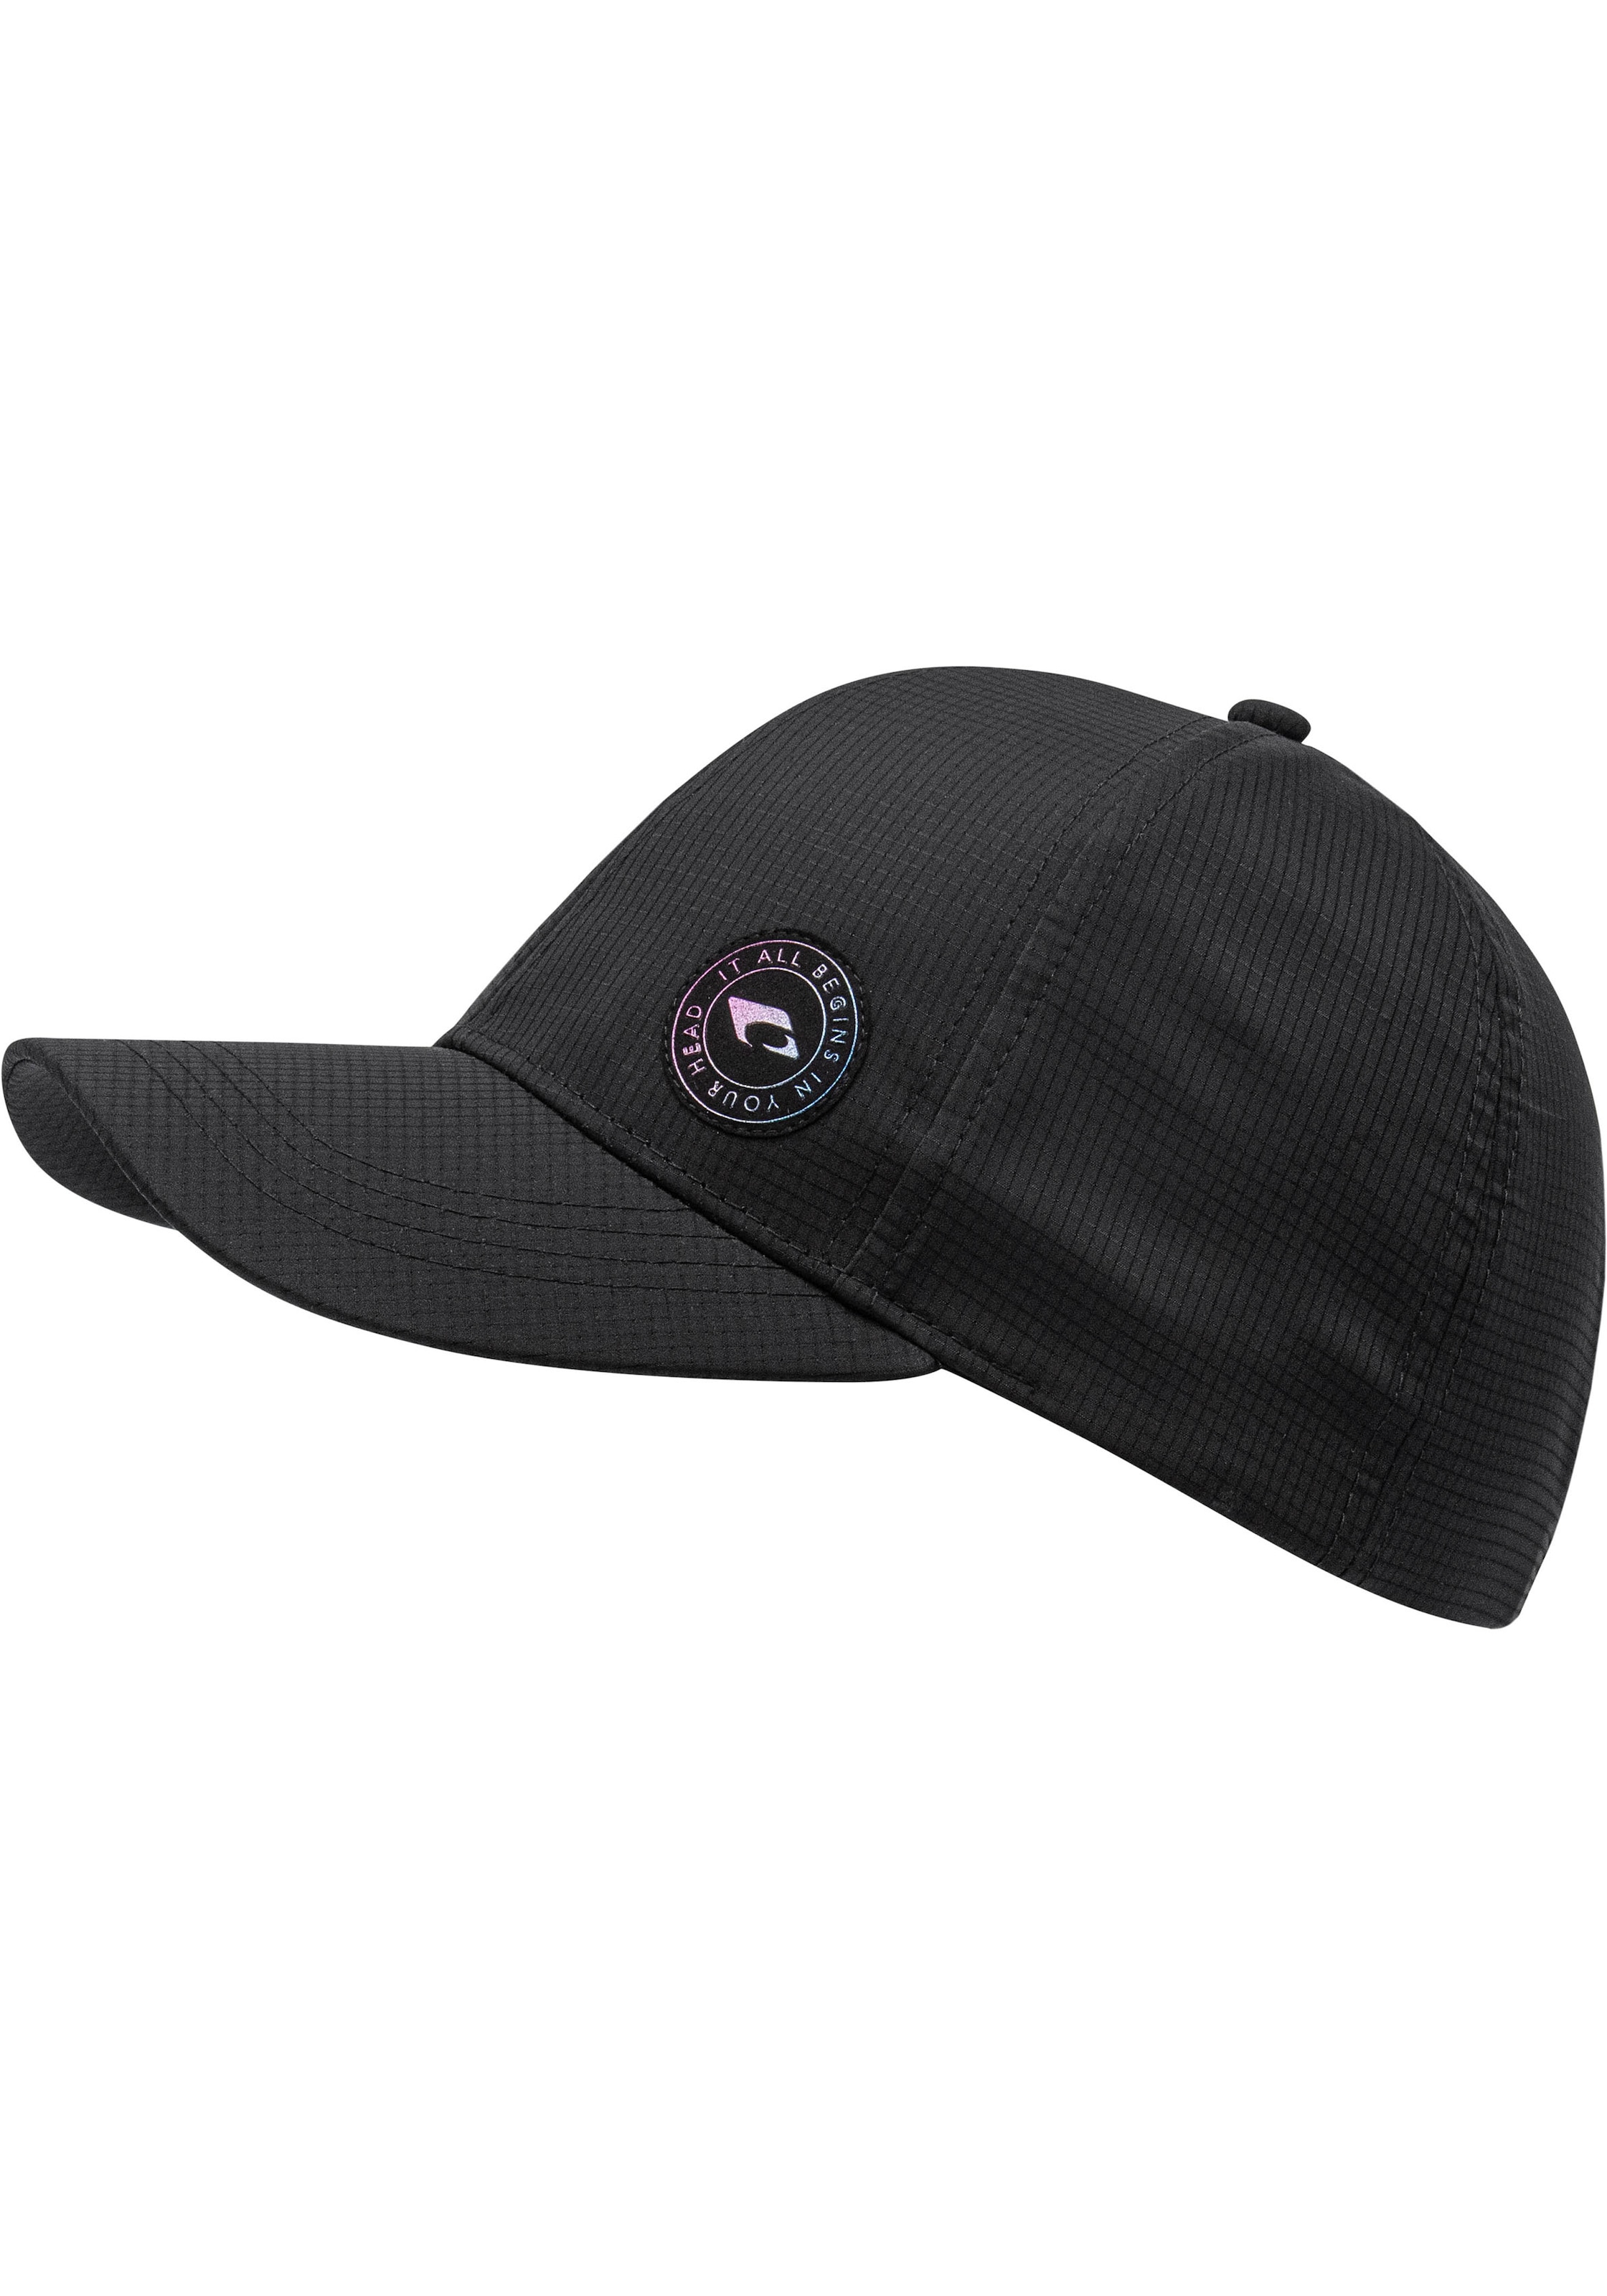 kaufen Hat | UNIVERSAL chillouts Baseball Cap, Langley